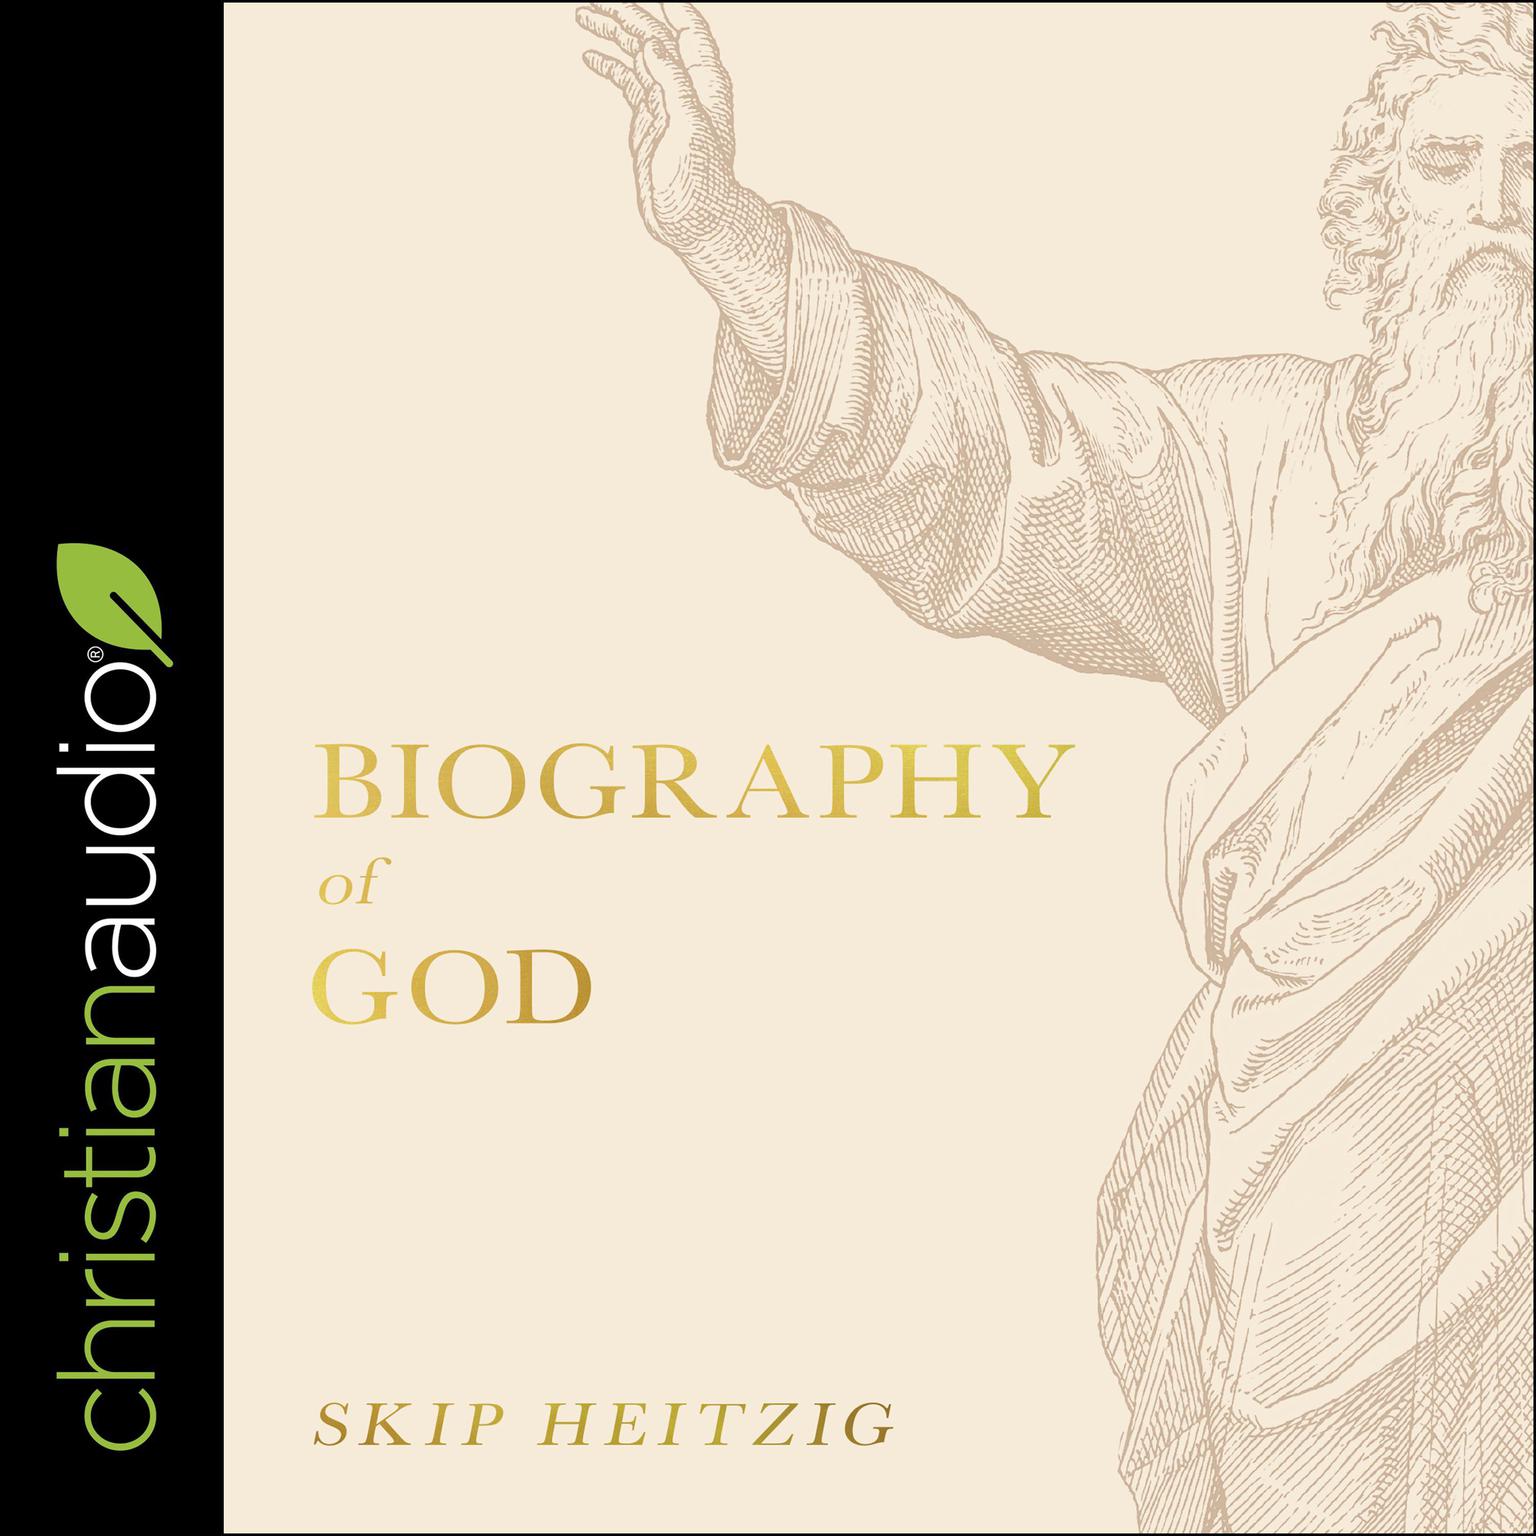 Biography of God Audiobook, by Skip Heitzig